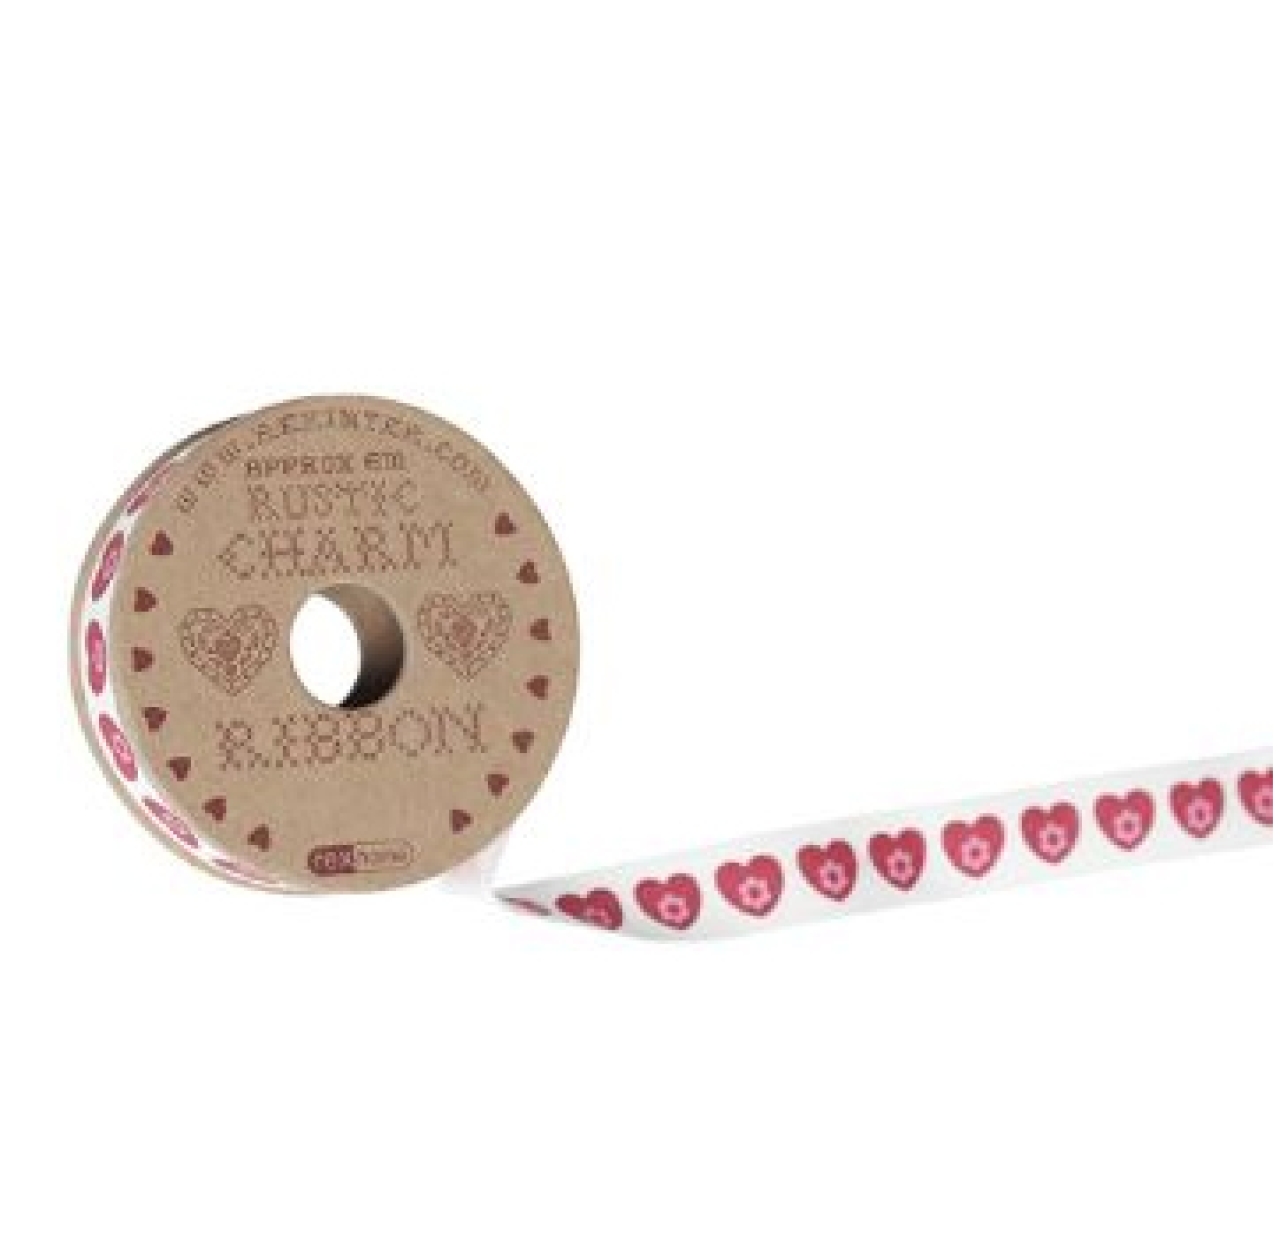 Ribbon Band, schleifenband, herzen, 2 cm x 600 cm | MEINCUPCAKE Shop